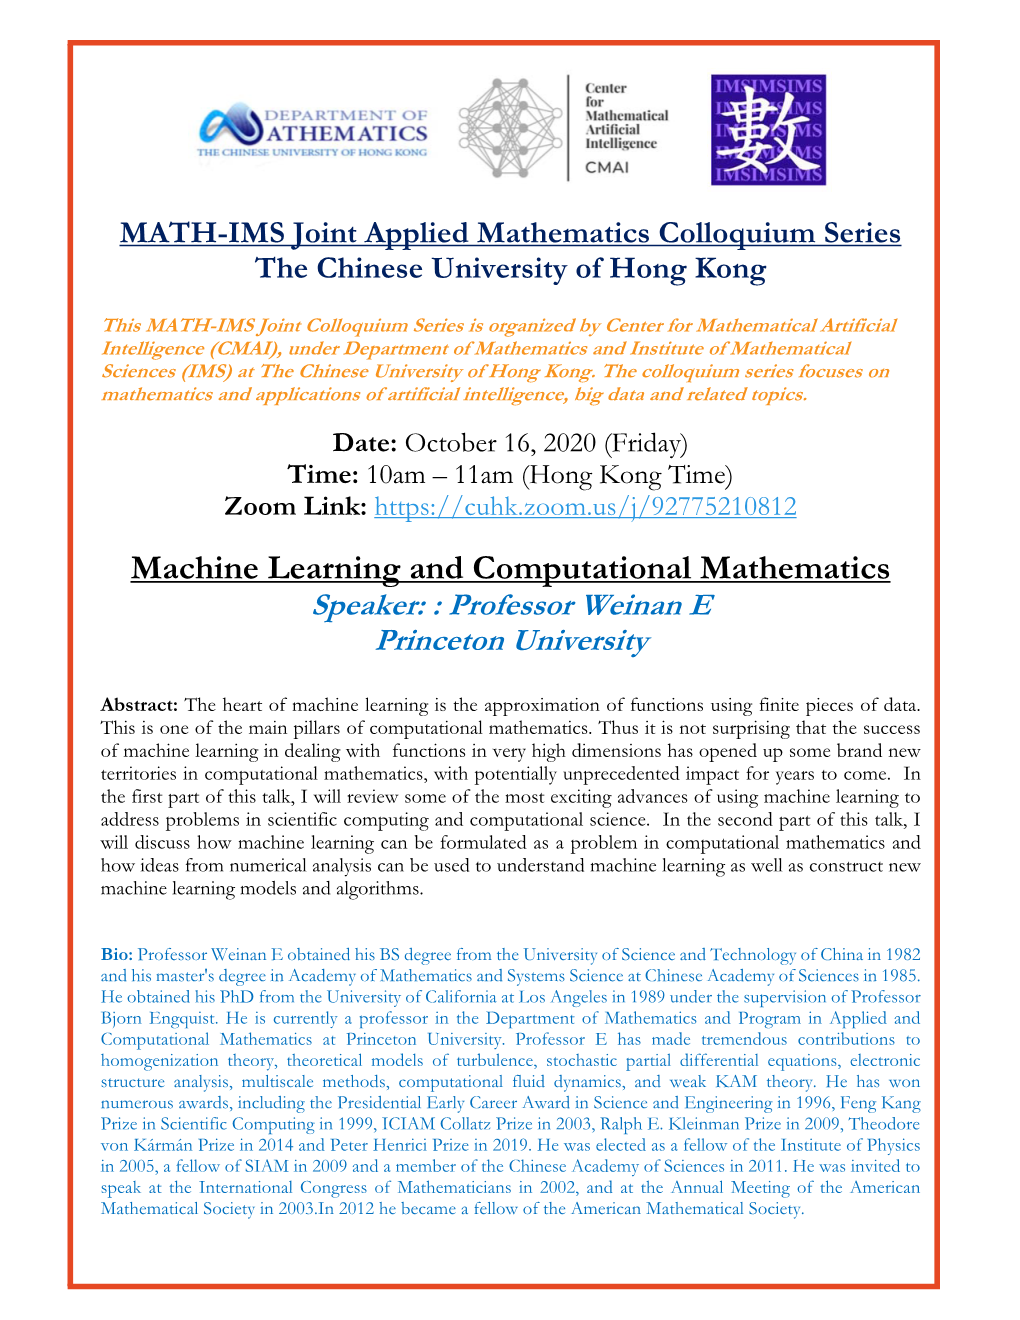 Machine Learning and Computational Mathematics Speaker: : Professor Weinan E Princeton University